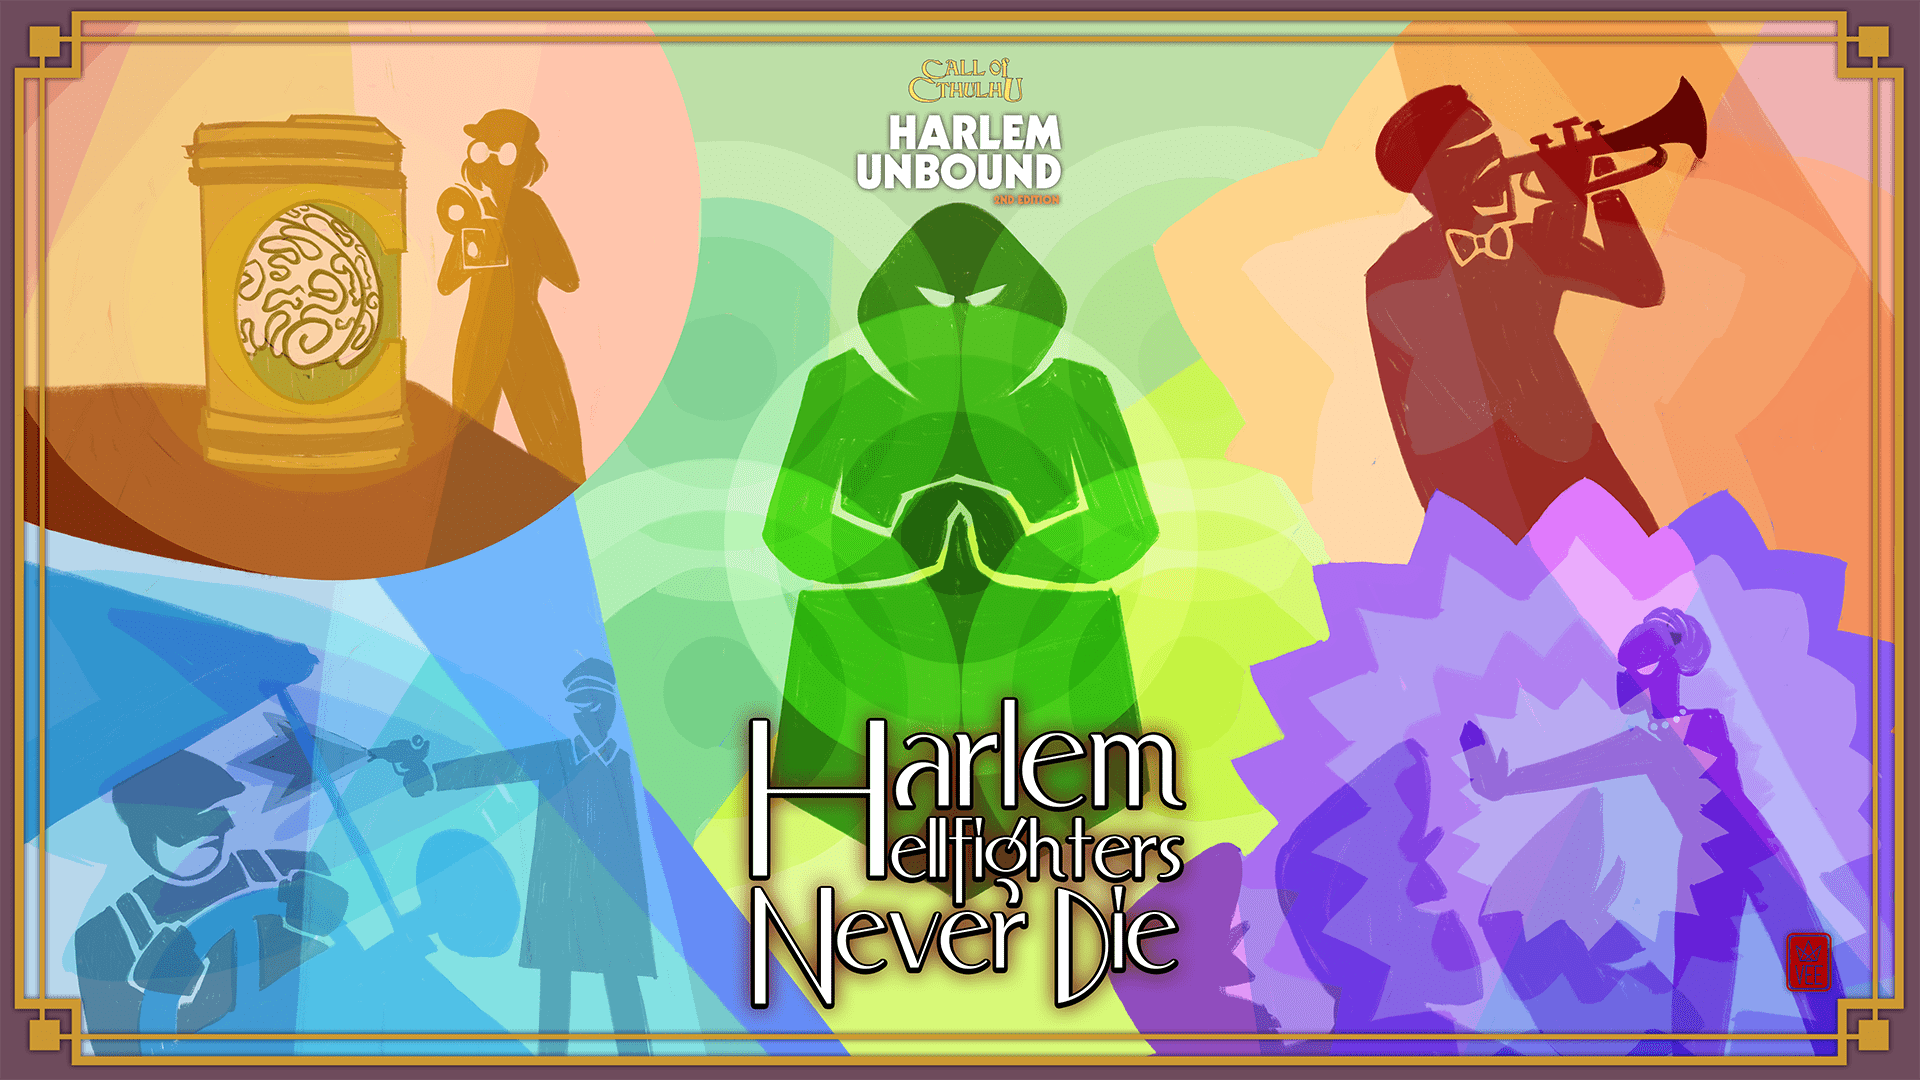 The cover for Harlem Unbound, Harlem Hellfighters Never Die